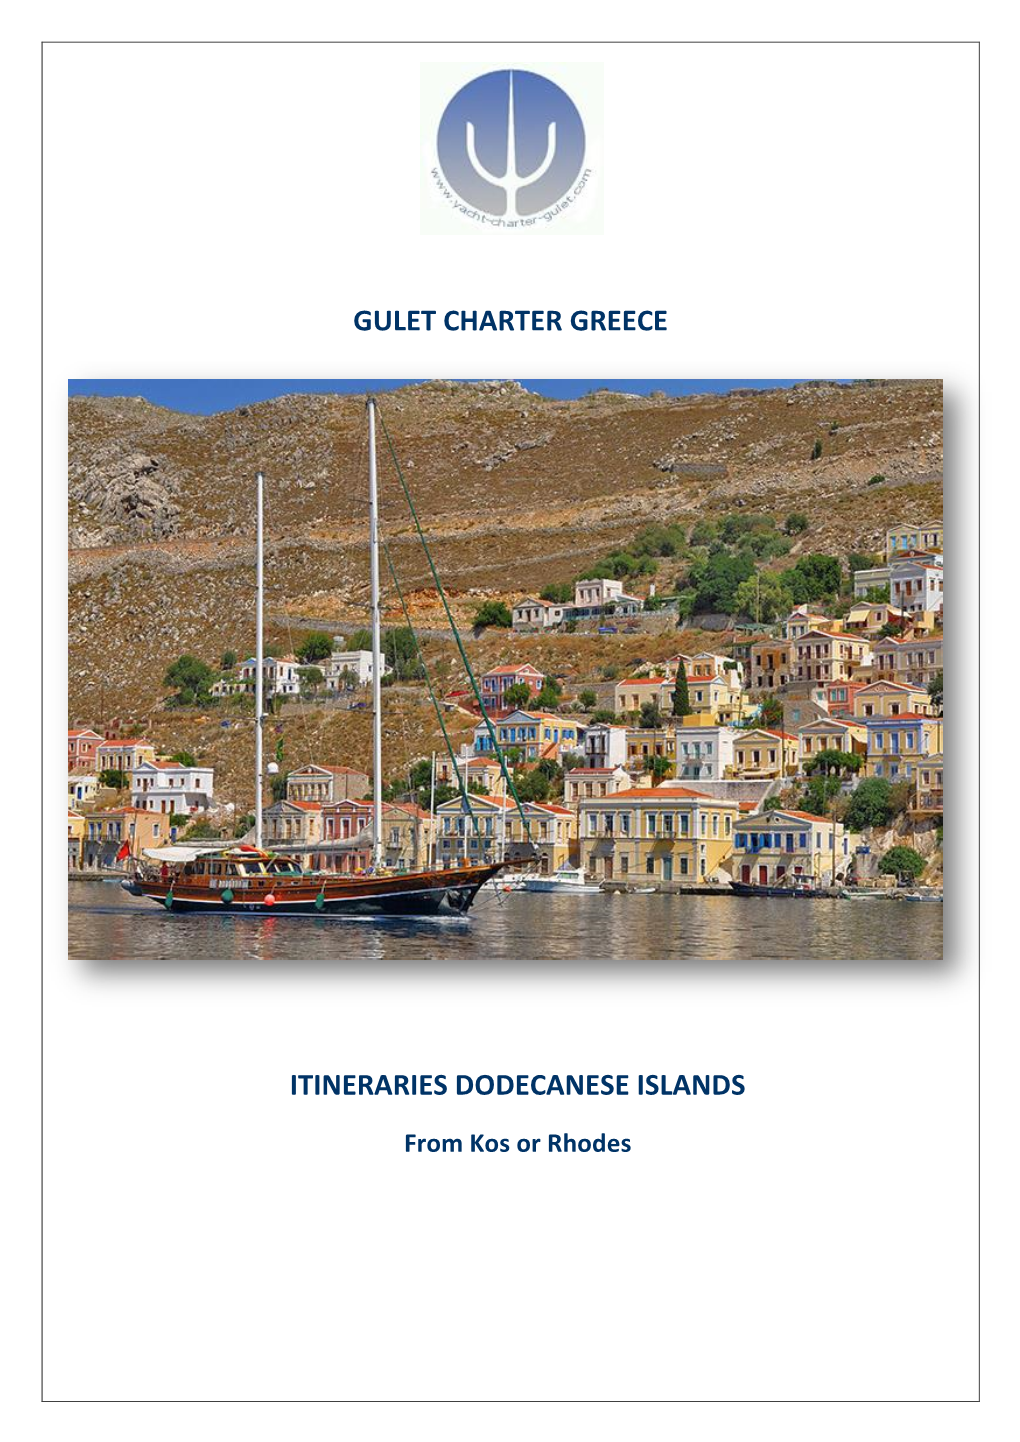 Gulet Charter Greece Itineraries Dodecanese Islands